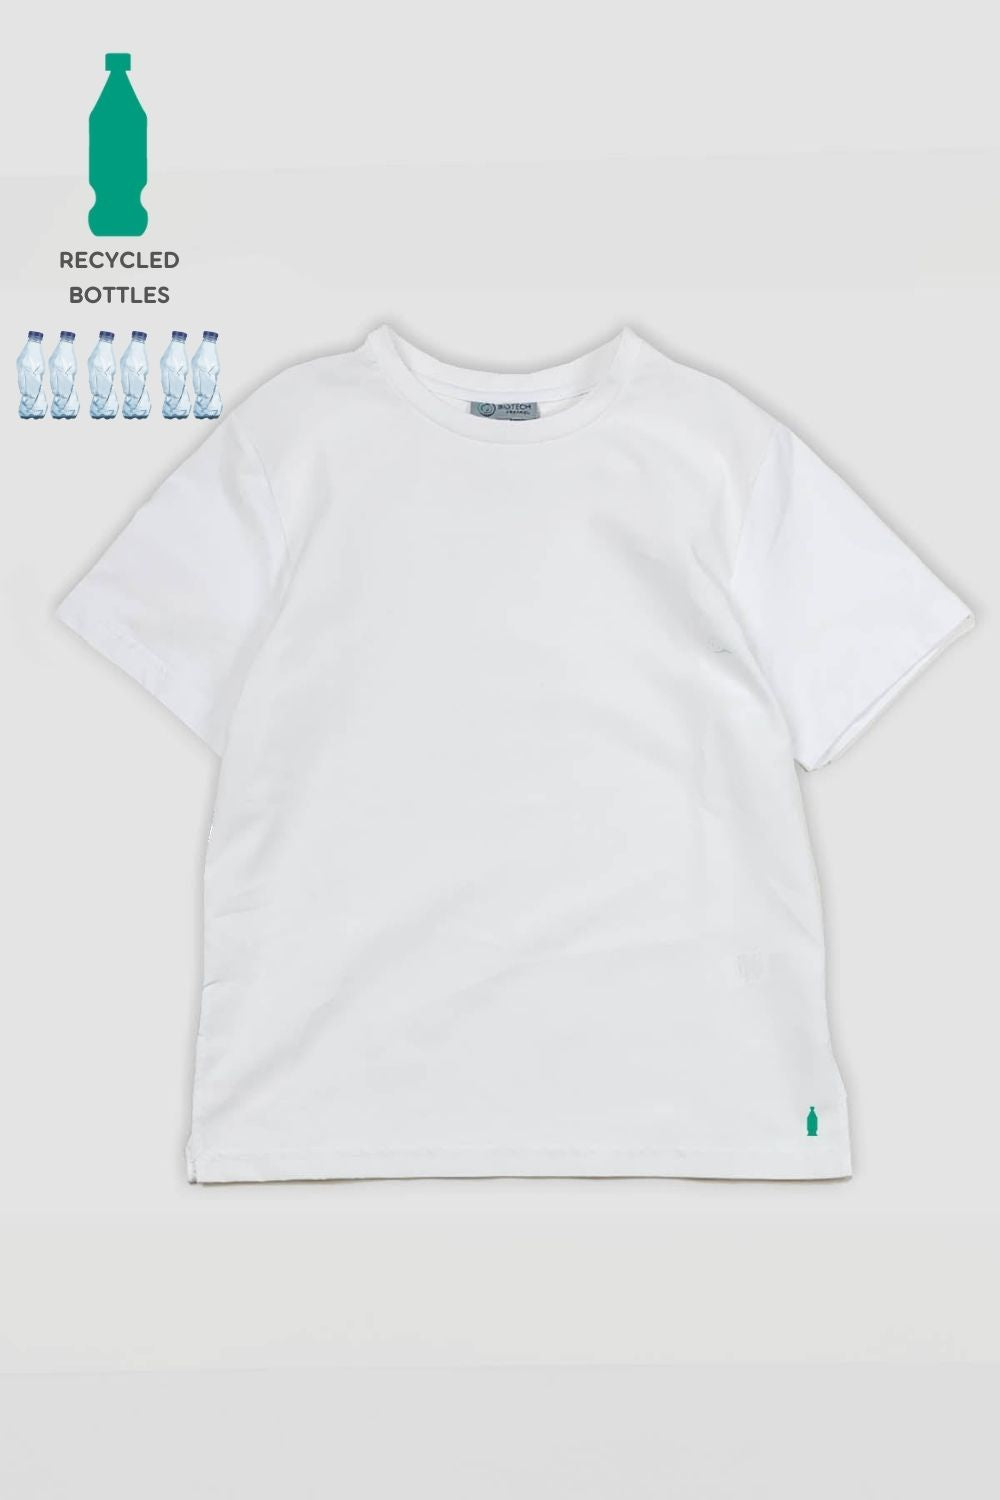 Men's  BioNTex™ Recycled Short Sleeve T-Shirt